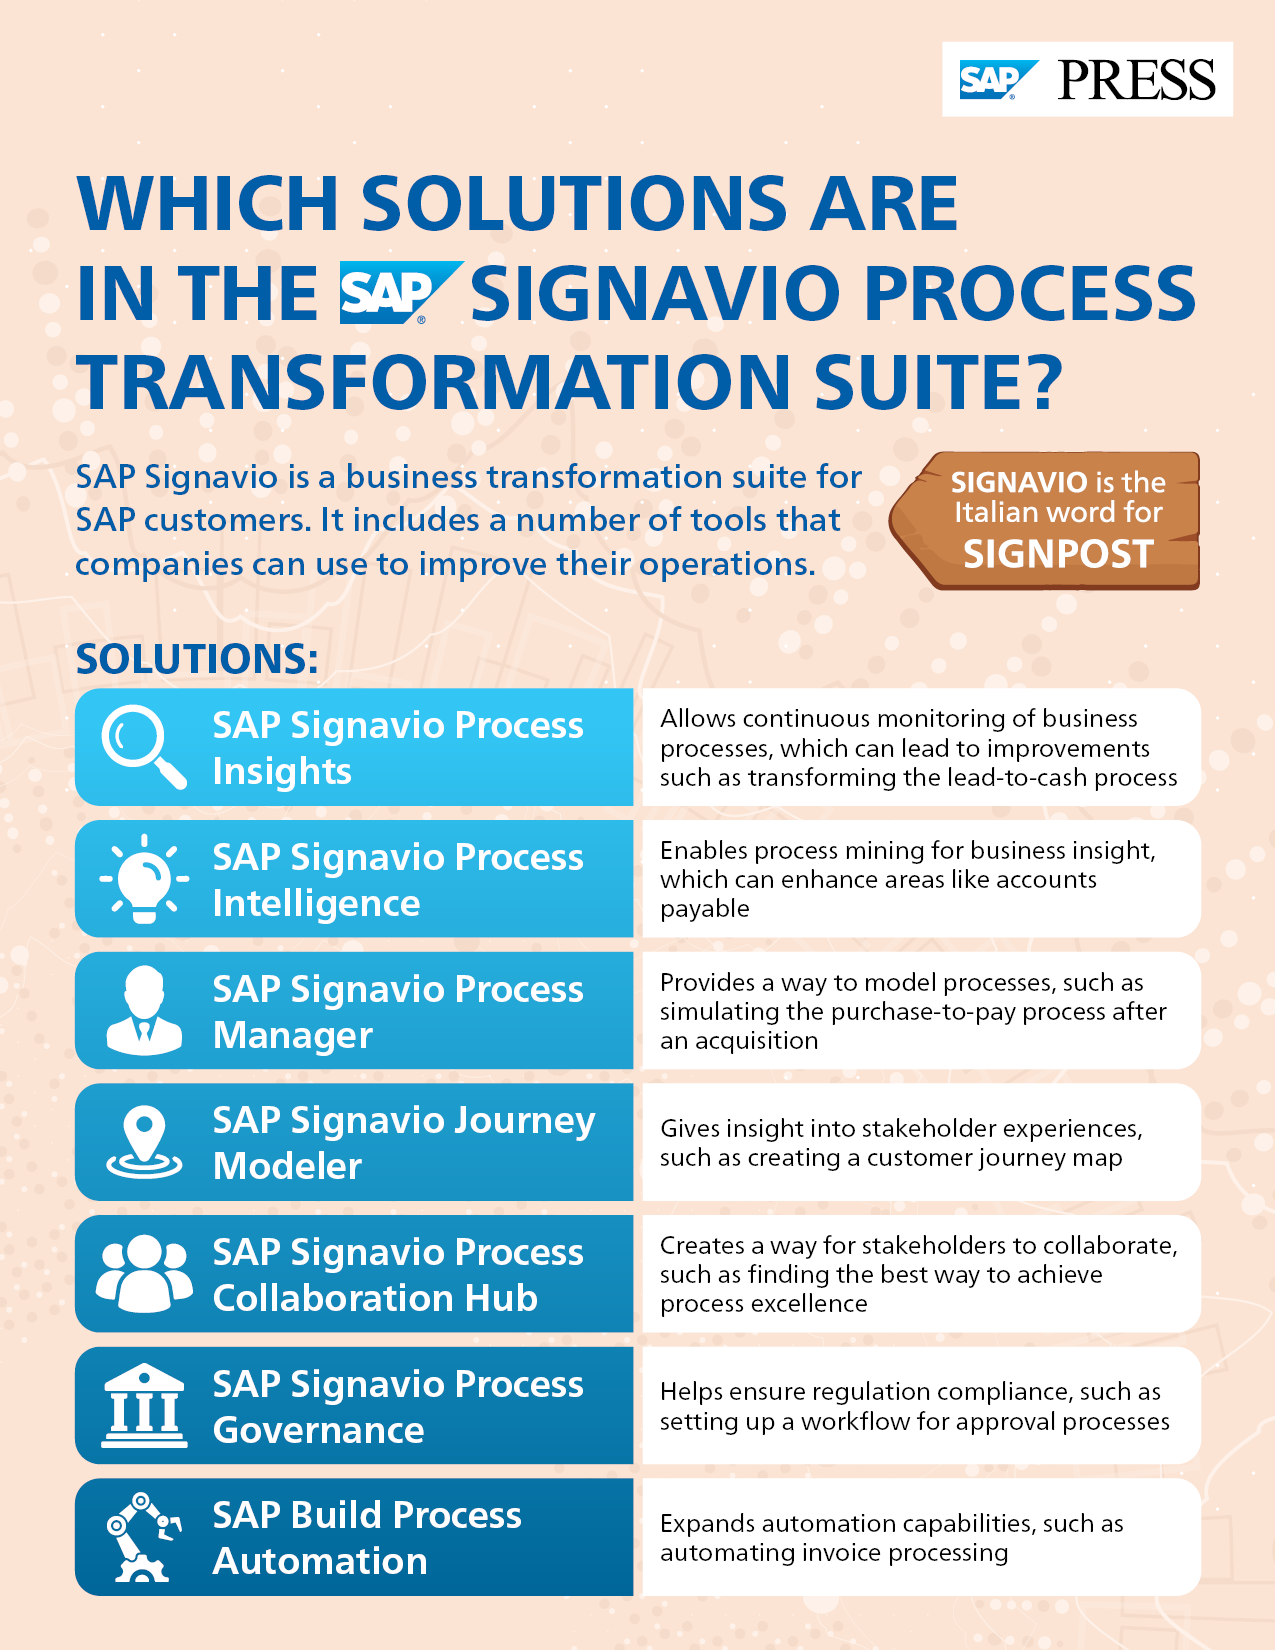 What Is SAP Signavio?